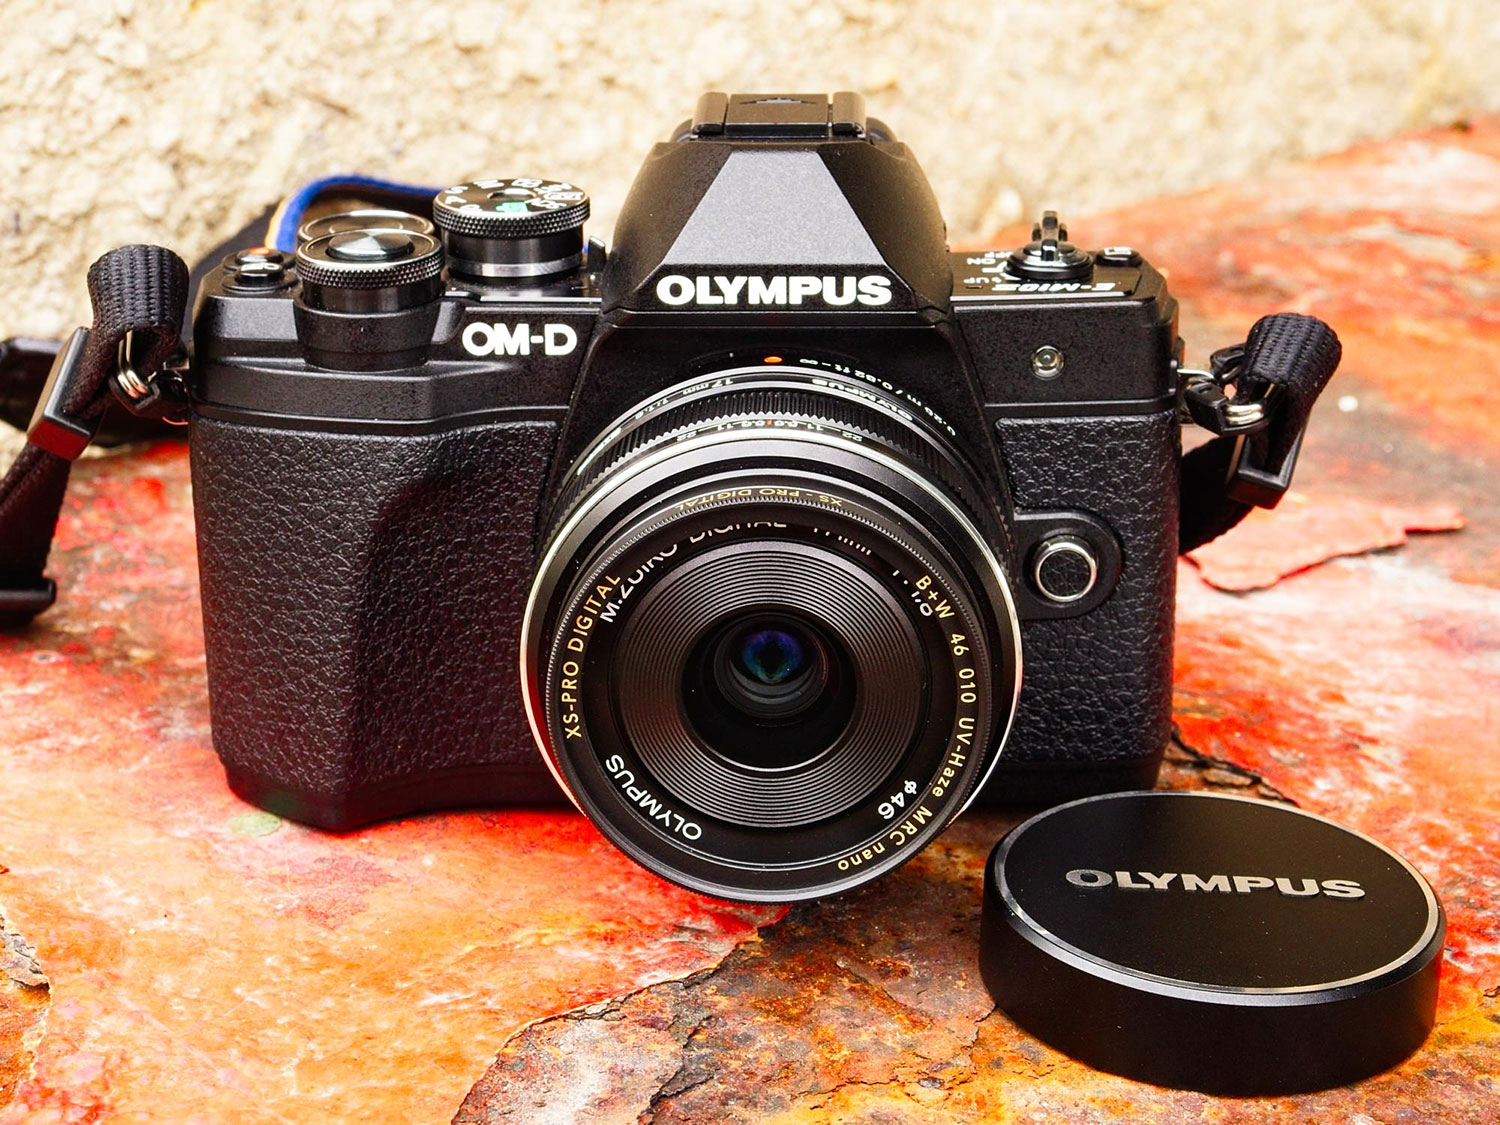 Olympus OM-D E-M10 Mark III Camera Body (Silver), Wi-Fi Enabled, 4K Video